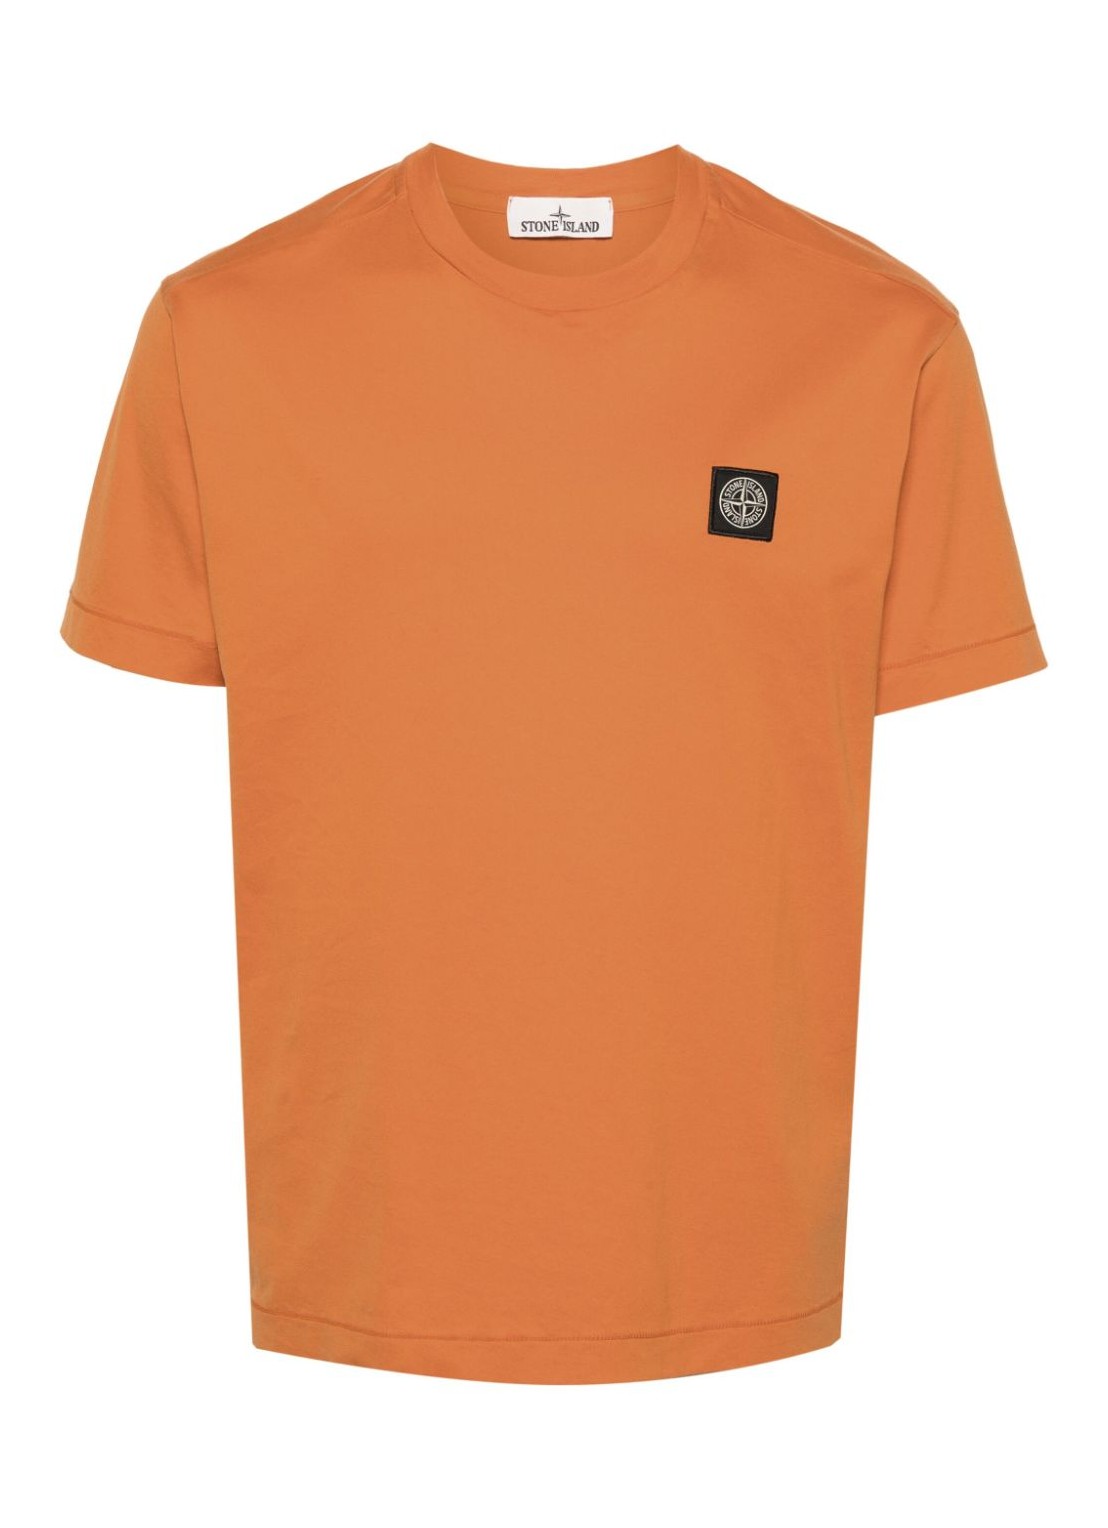 Camiseta stone island t-shirt man t shirt 801524113 v0032 talla S
 